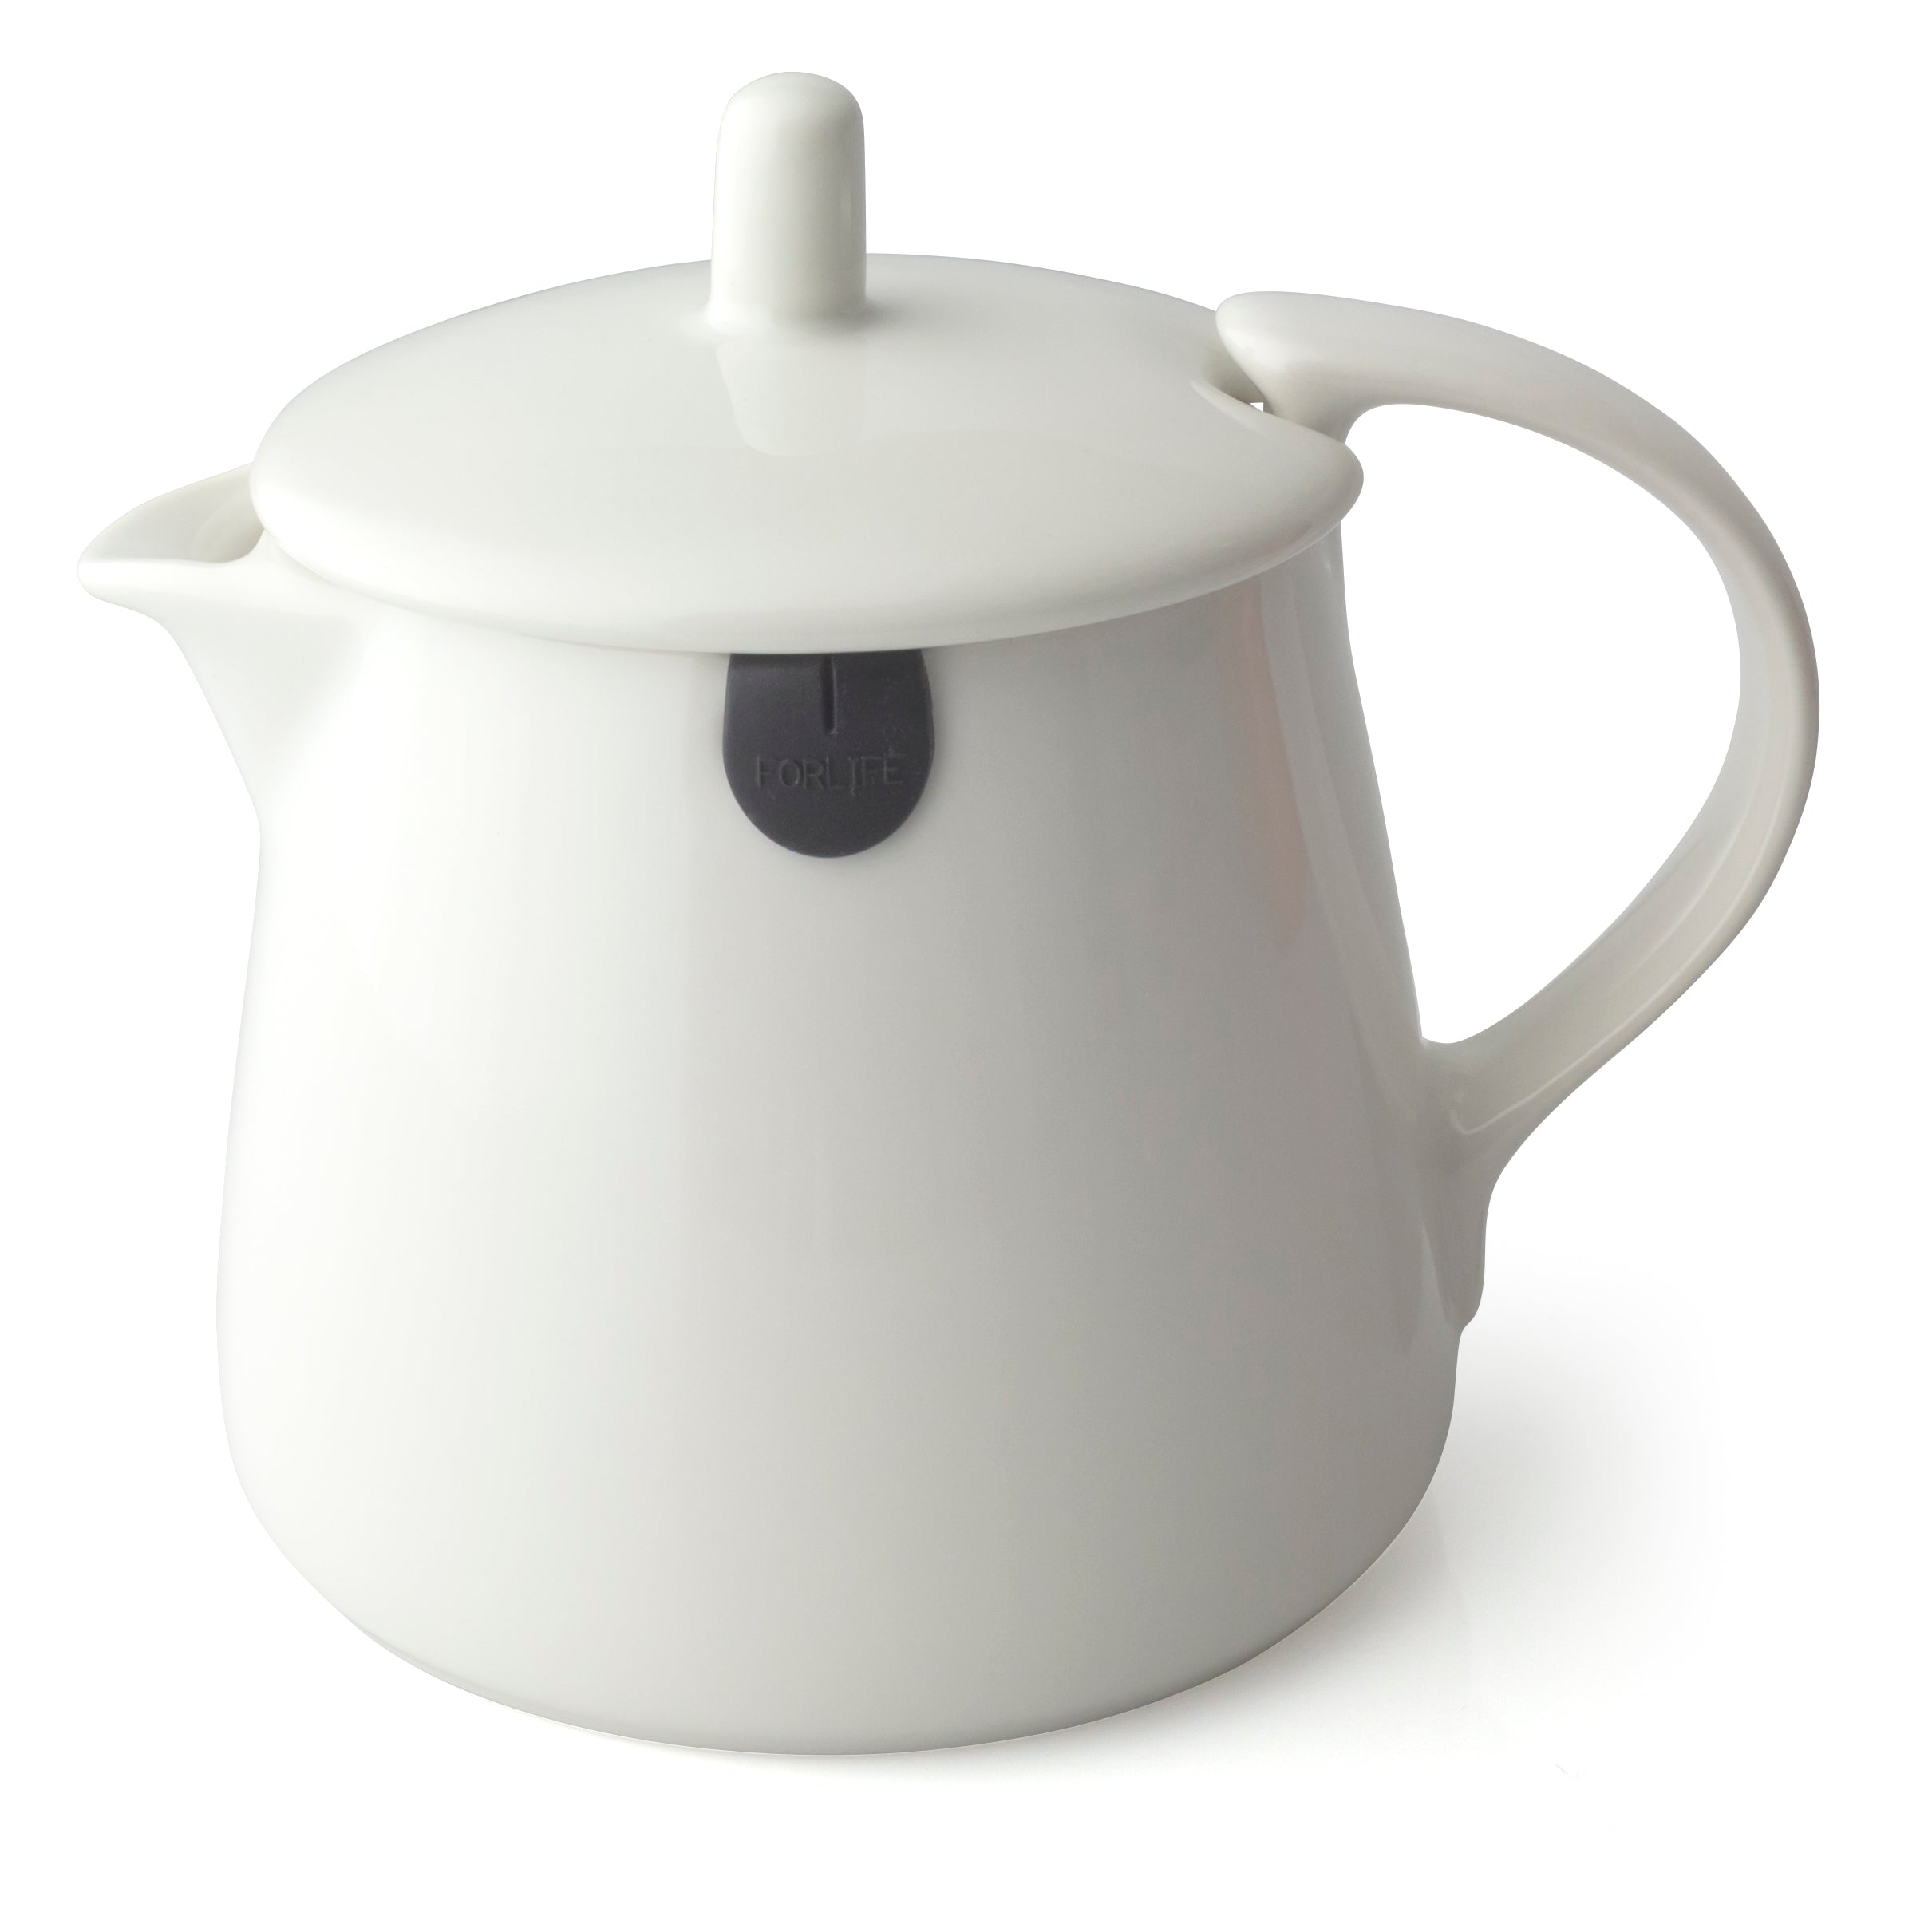 Teabag Teapot 12 oz.